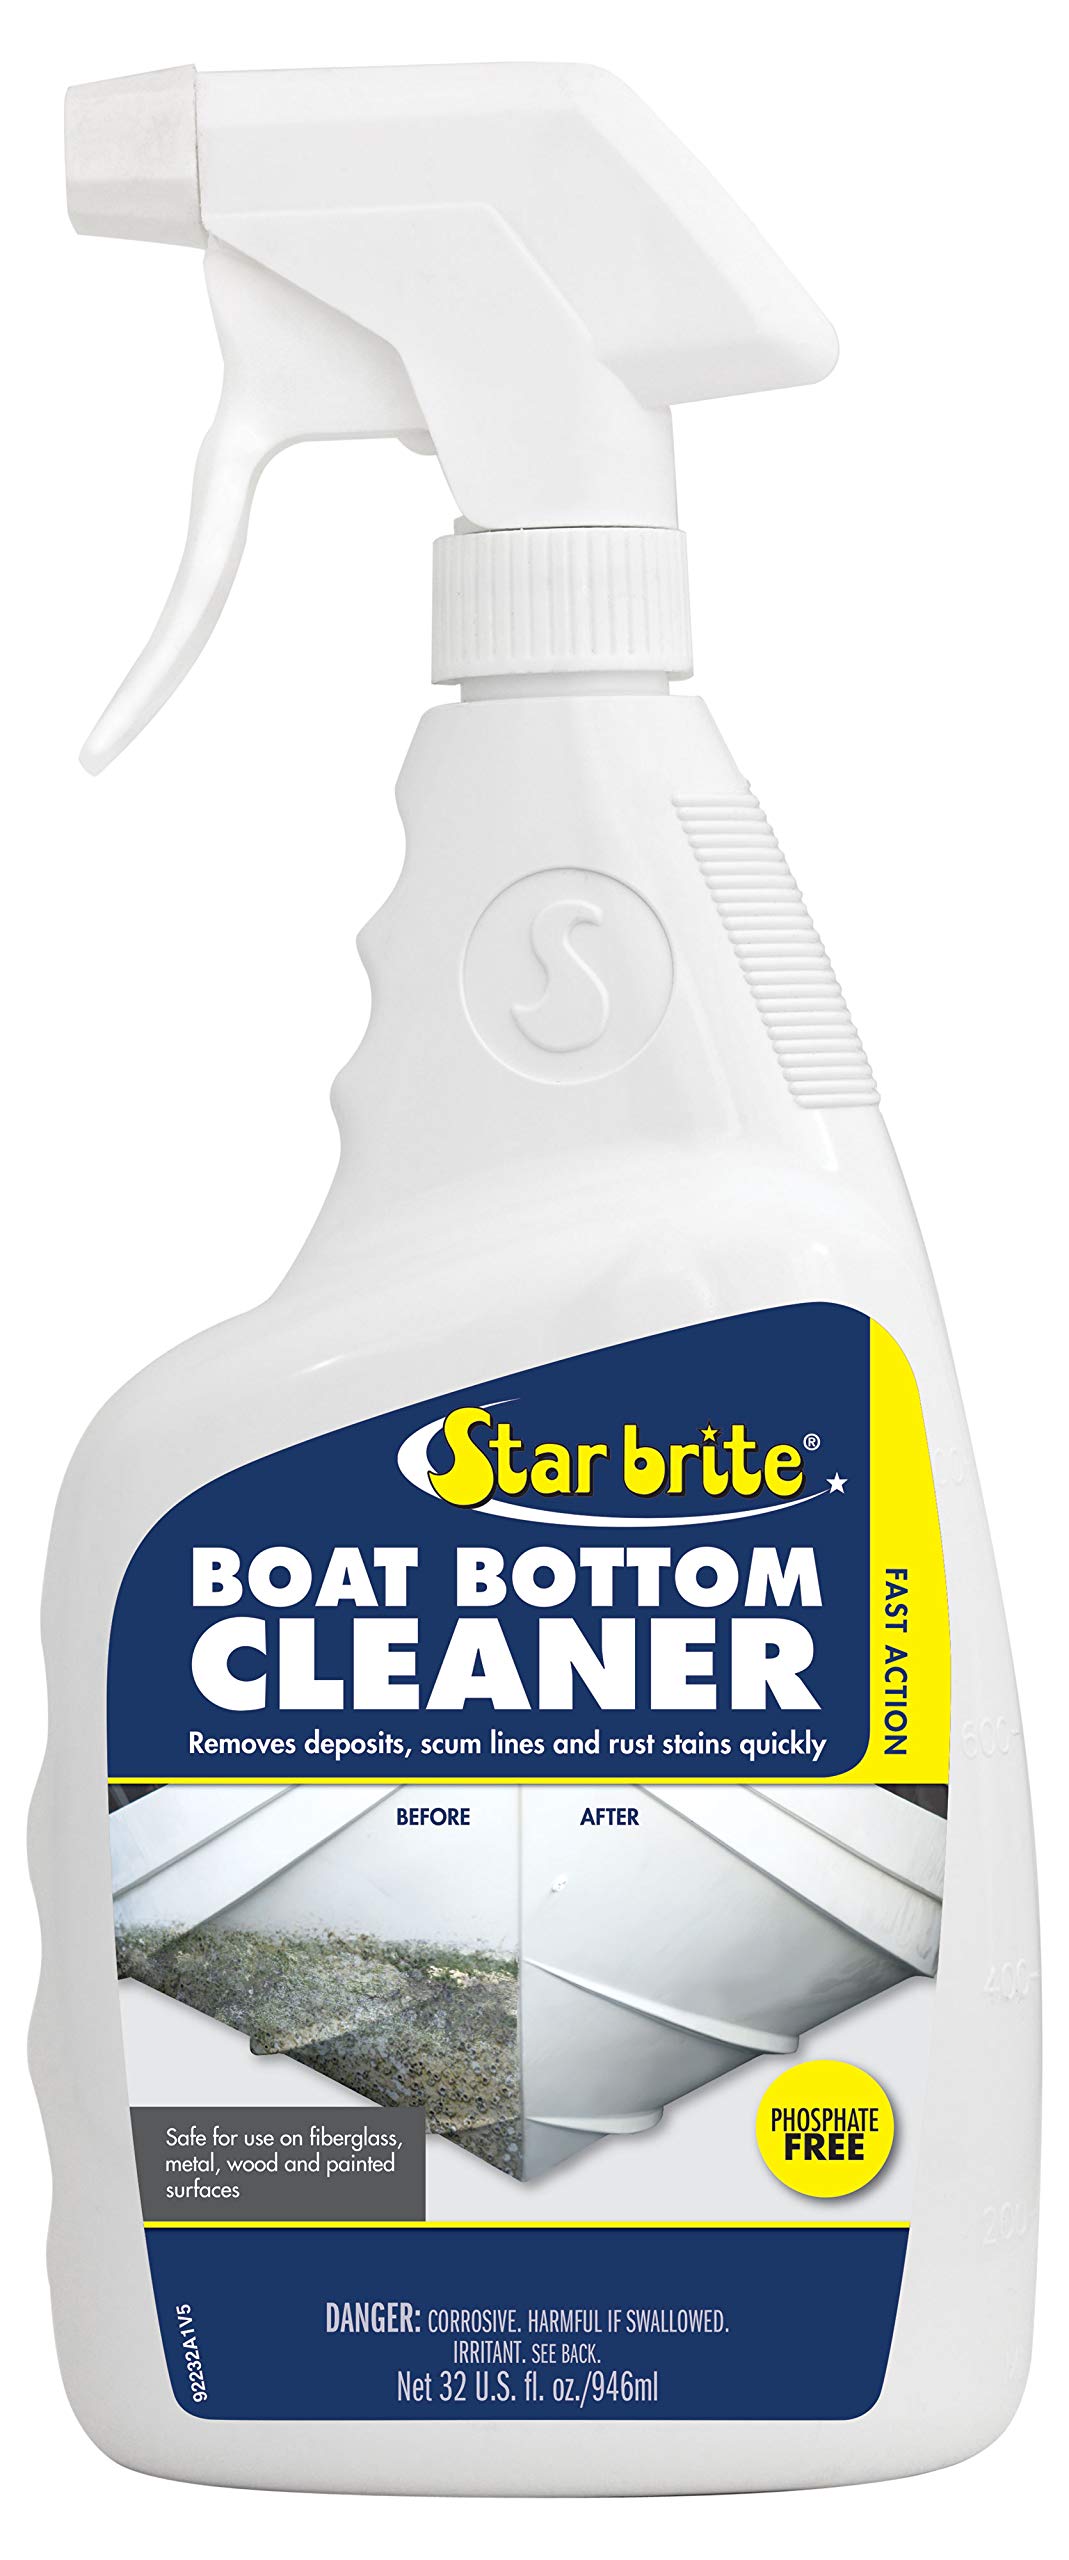 star brite boat bottom cleaner